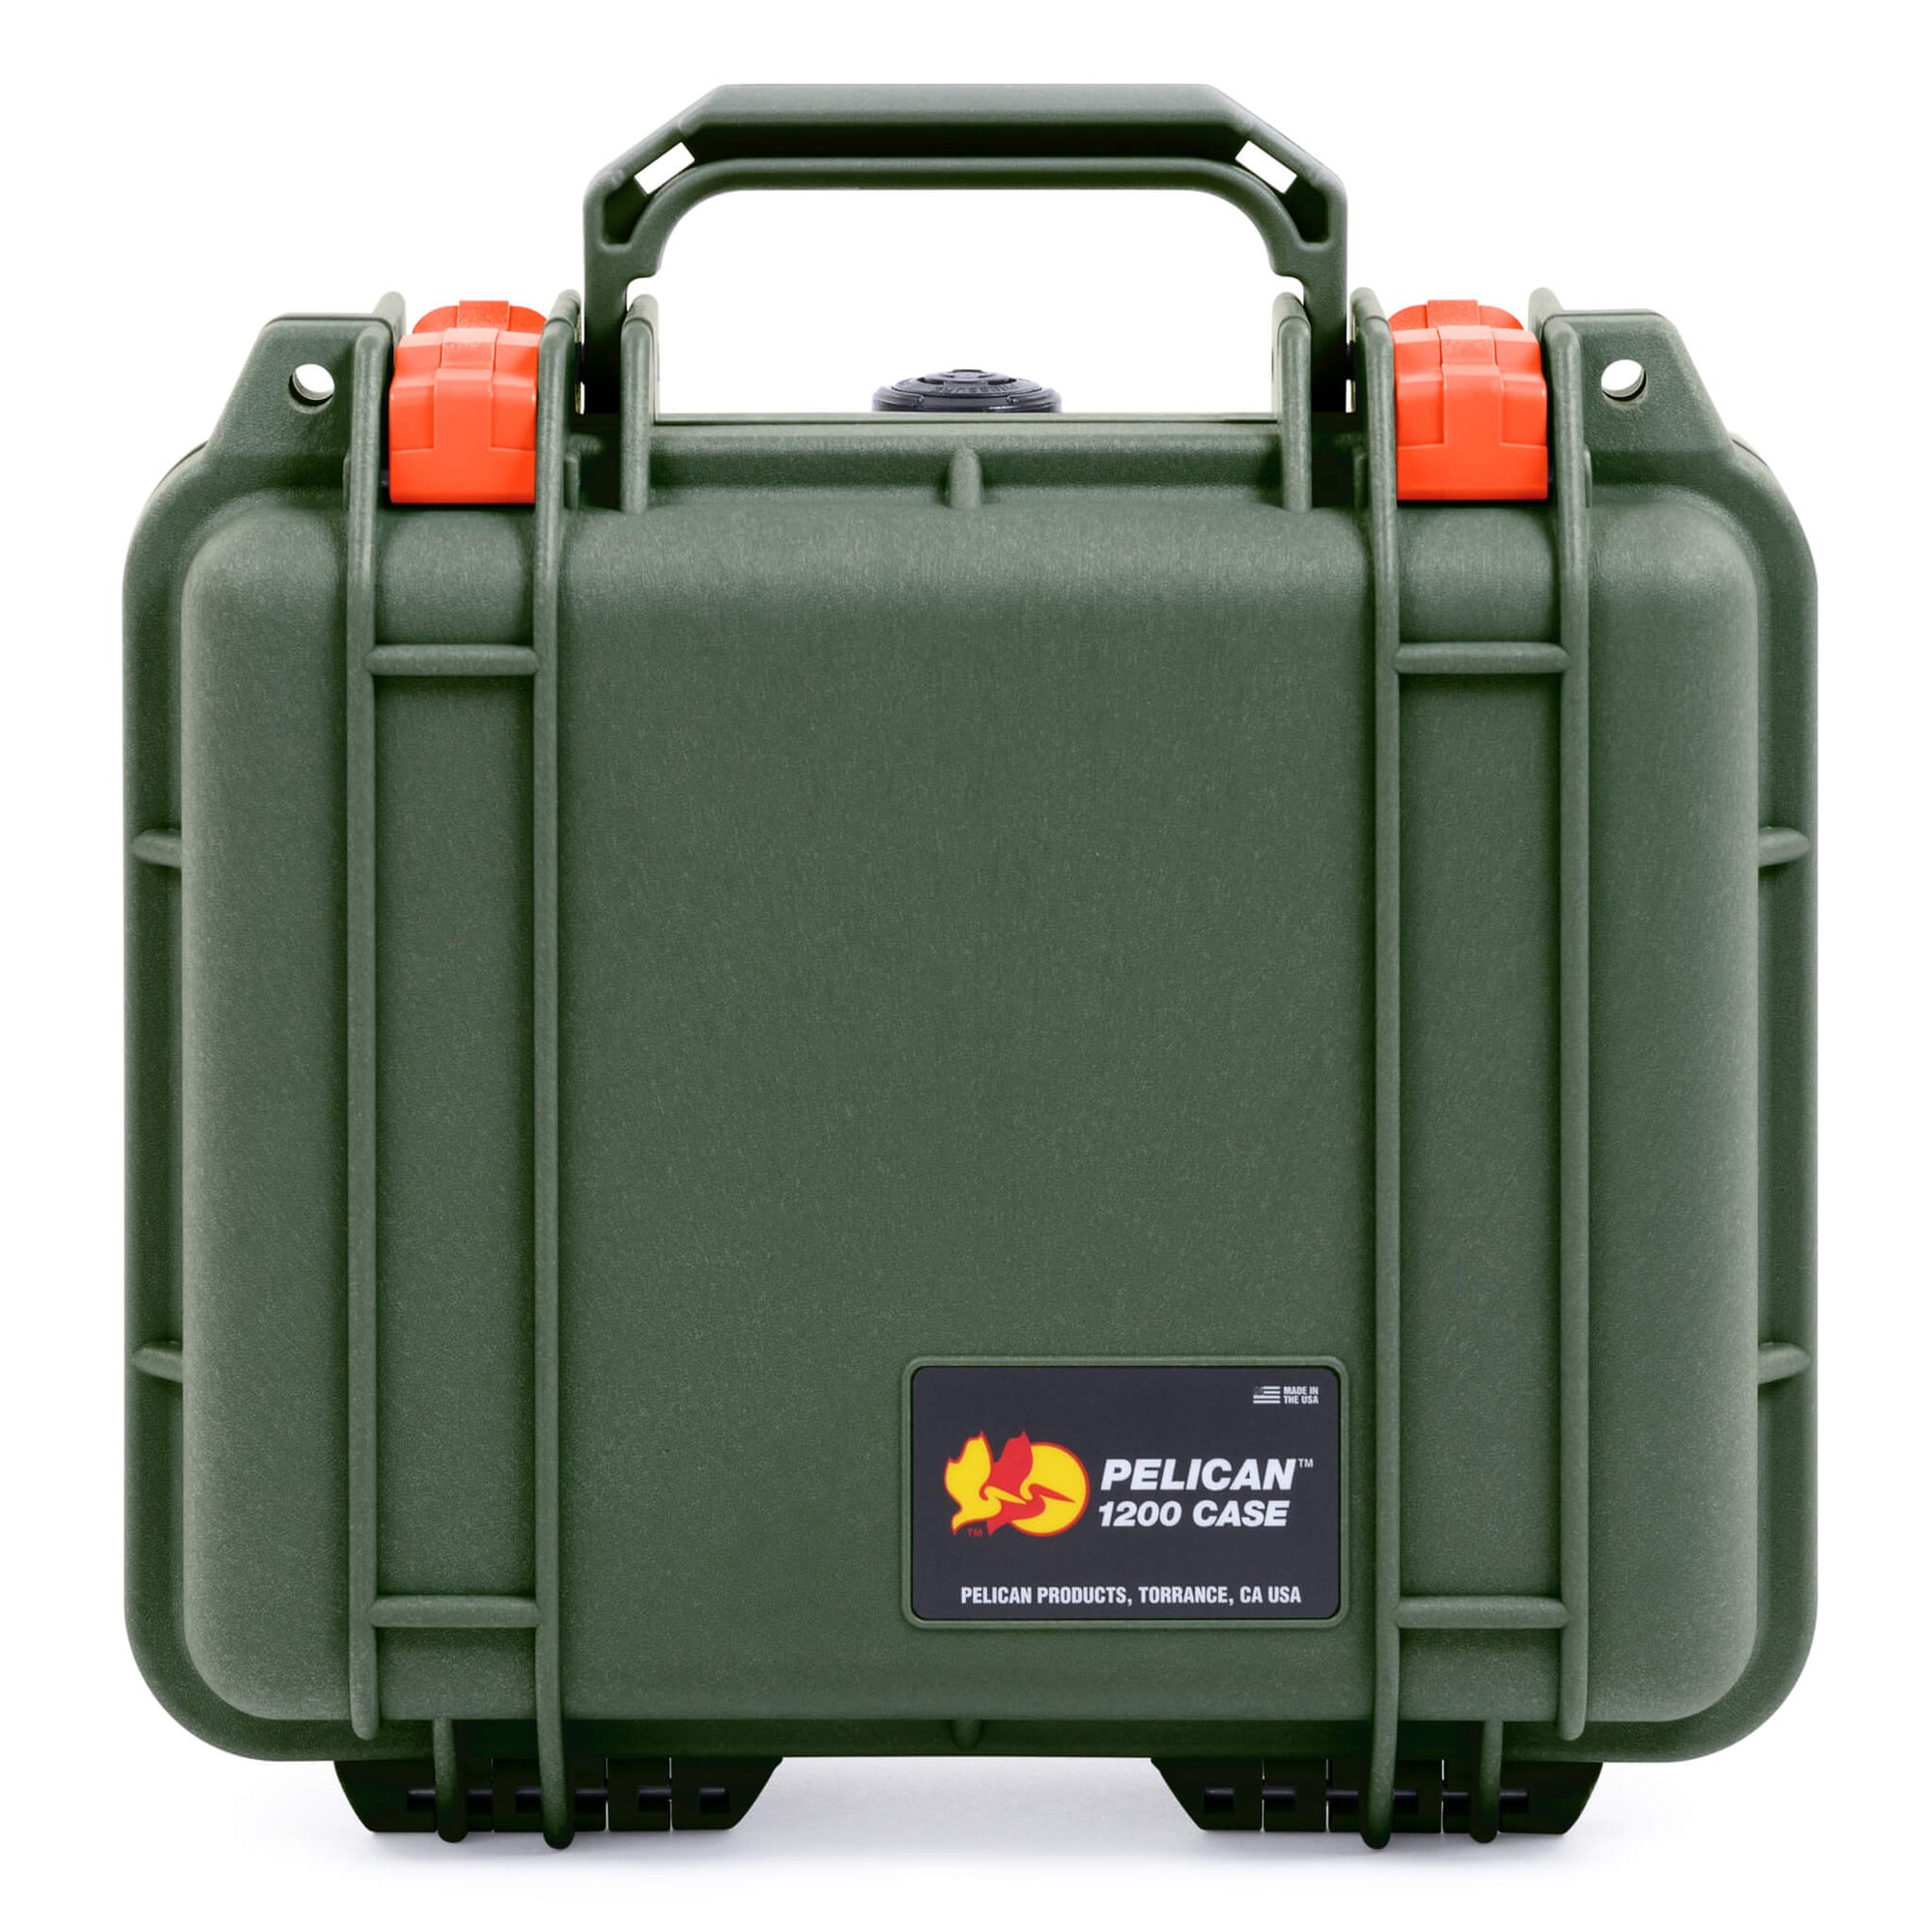 Pelican 1200 Case, OD Green with Orange Latches ColorCase 